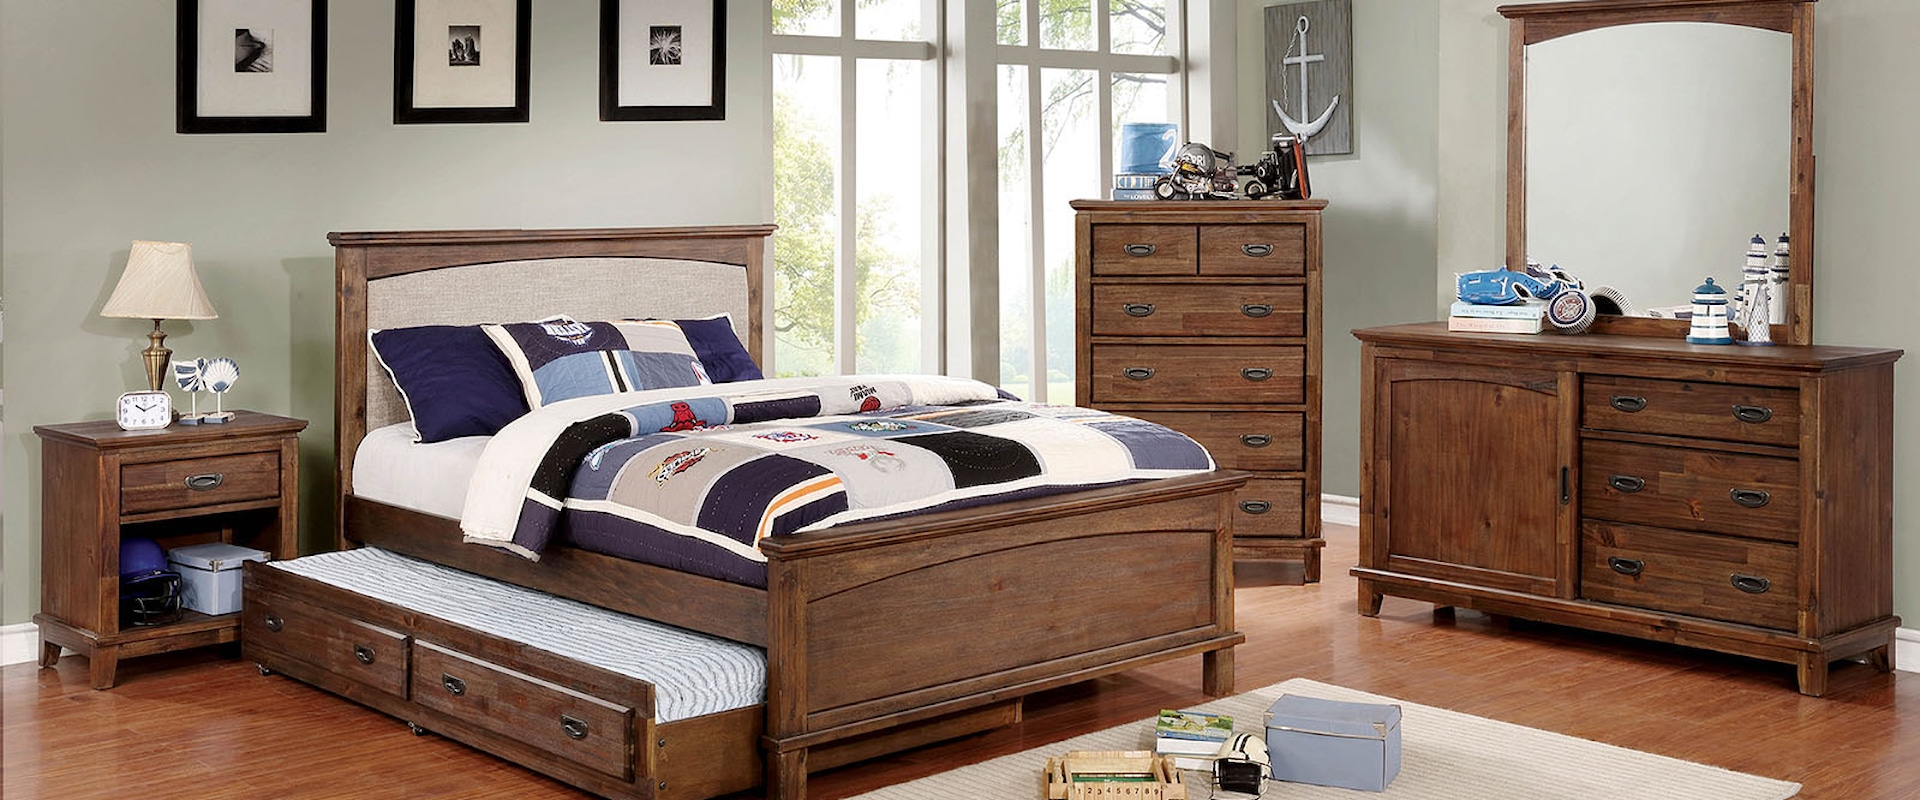 4-Piece Upholstered Full Bedroom Set